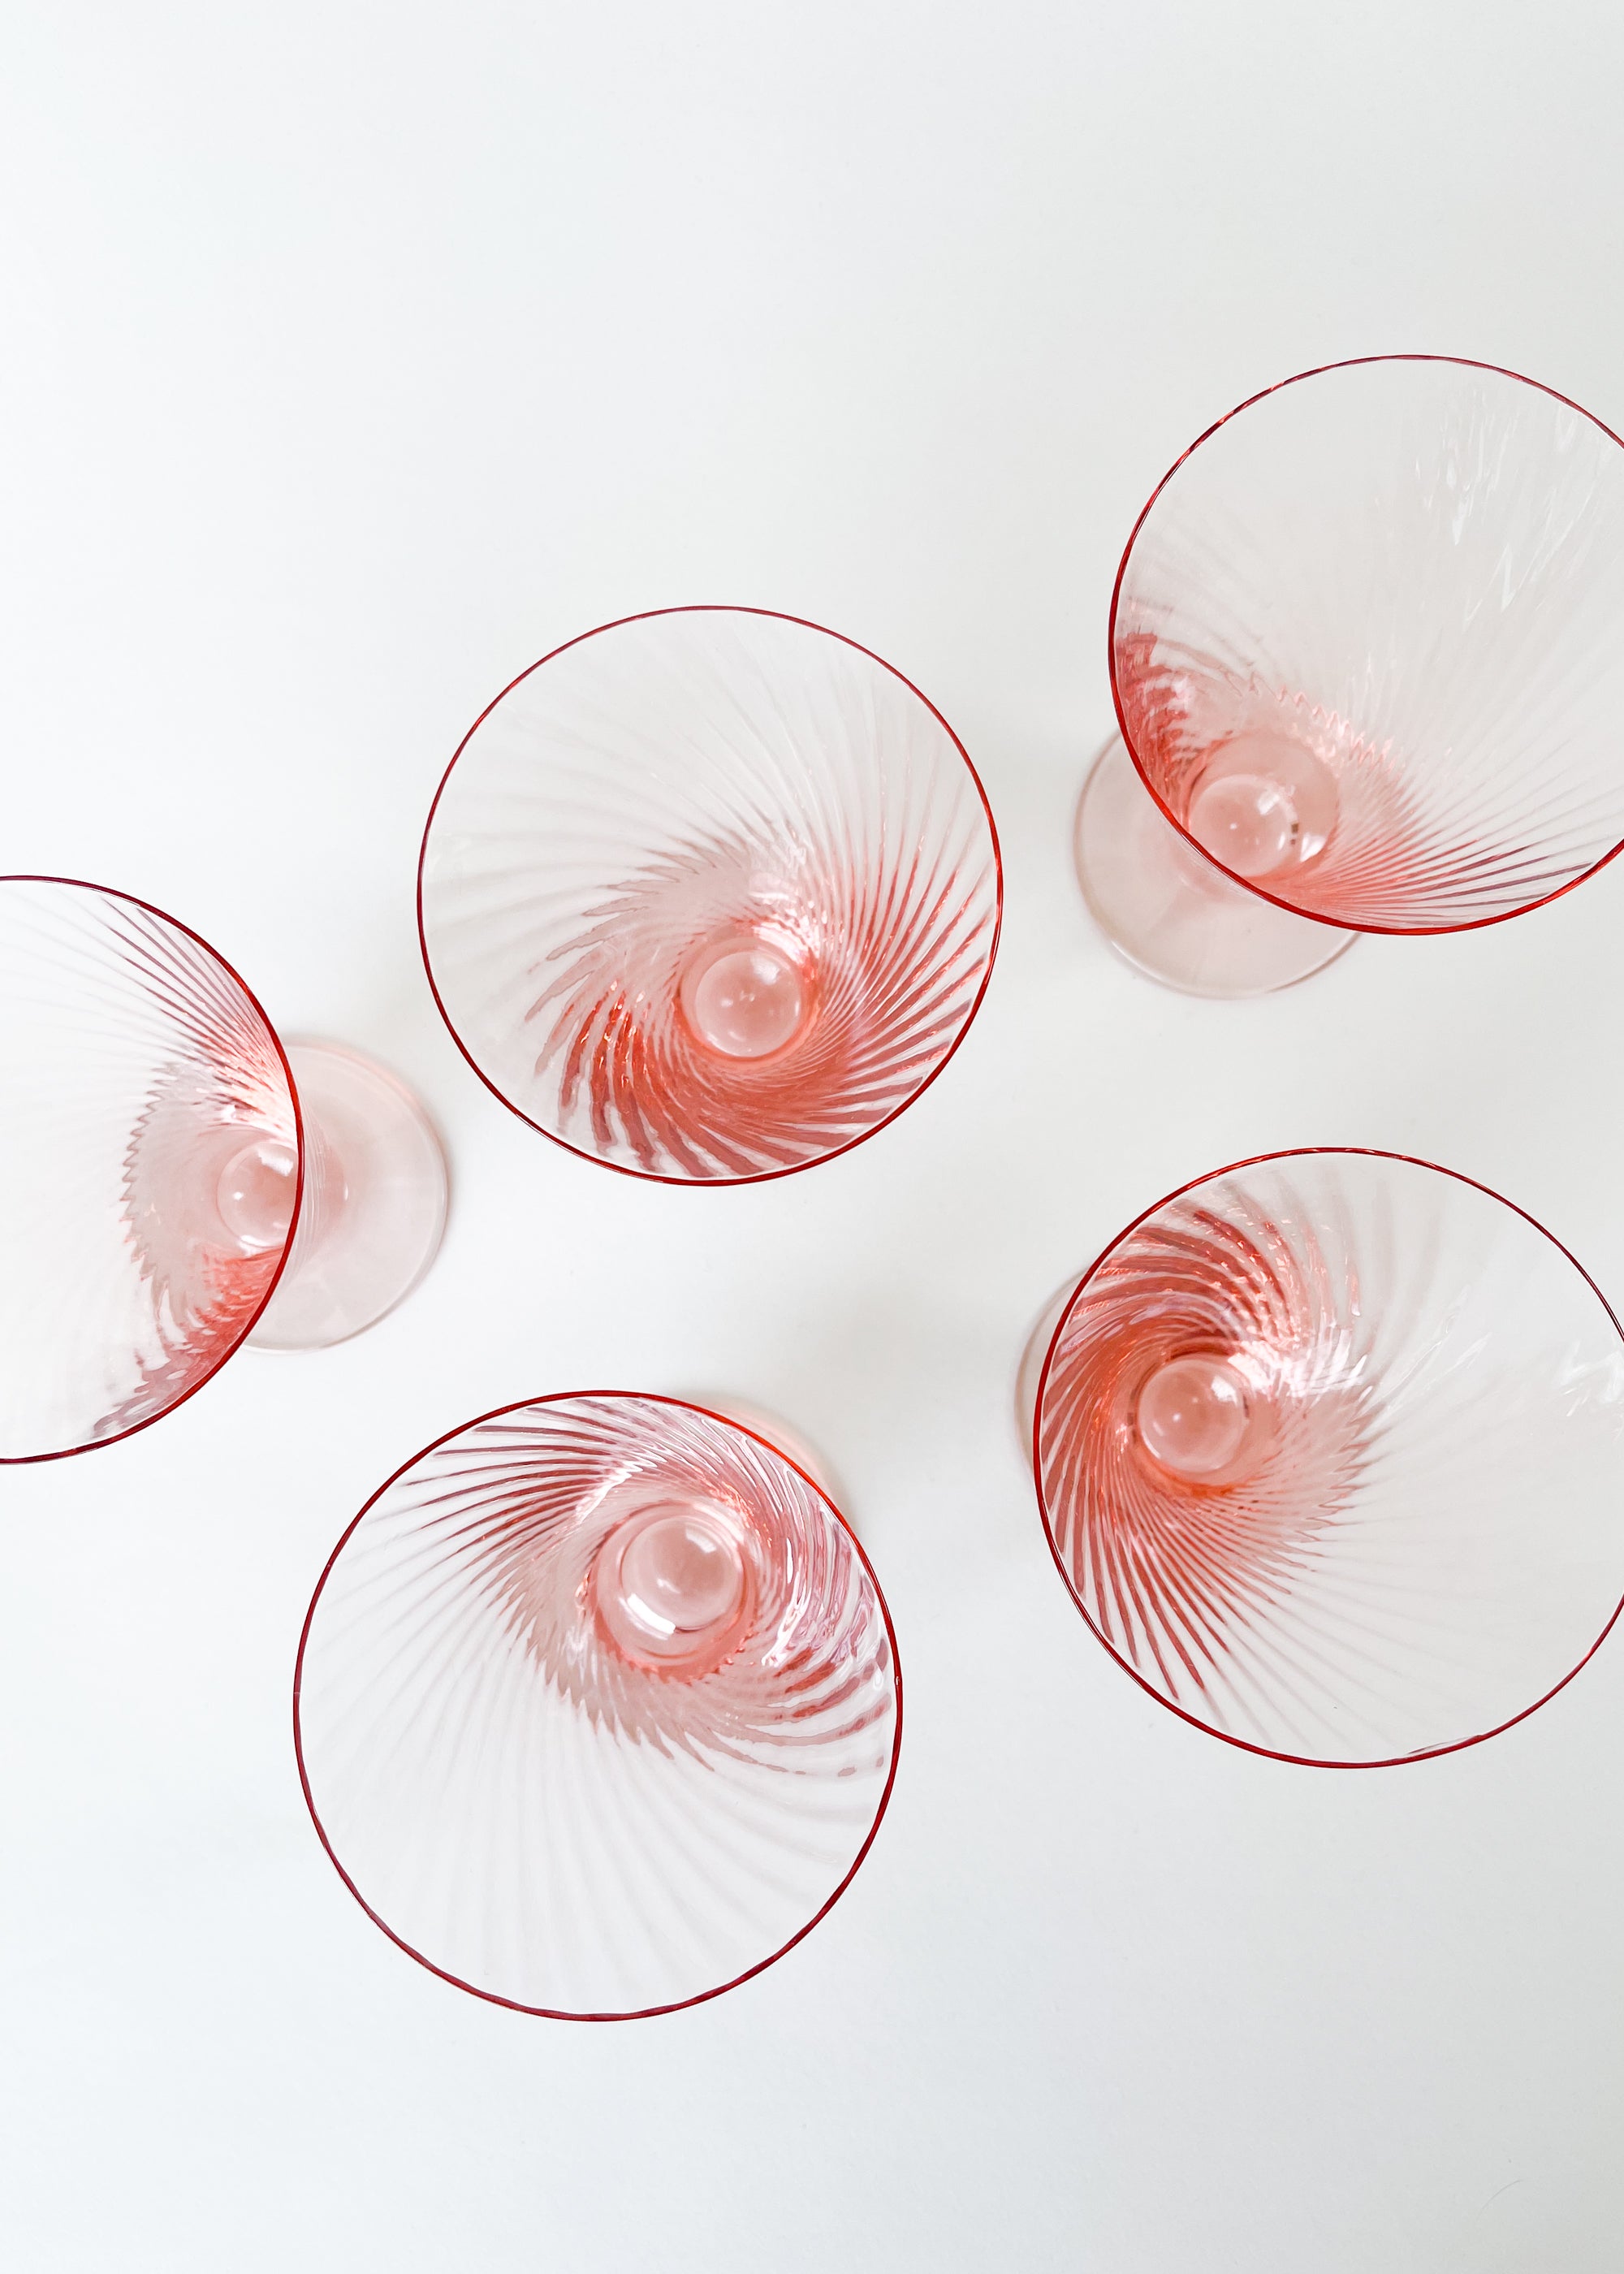 Symphony swirl optic pattern drinking glasses set of 8, vintage Wheaton  rose pink glass tumblers